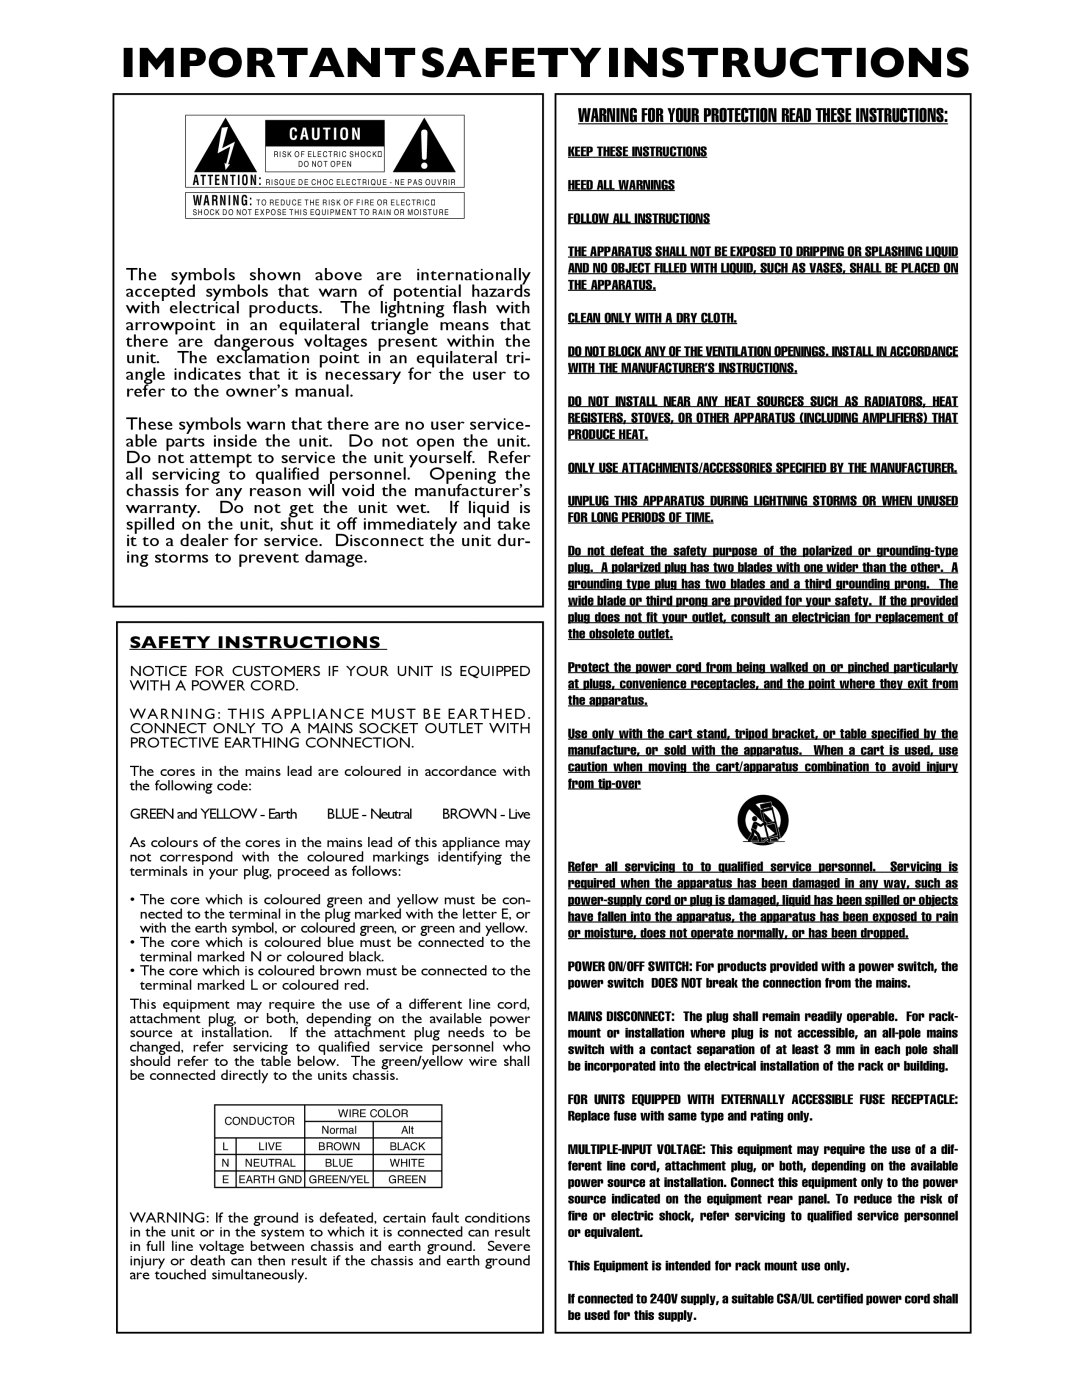 Harman 4800, 4820 user manual Importantsafetyinstructions, Safety Instructions 